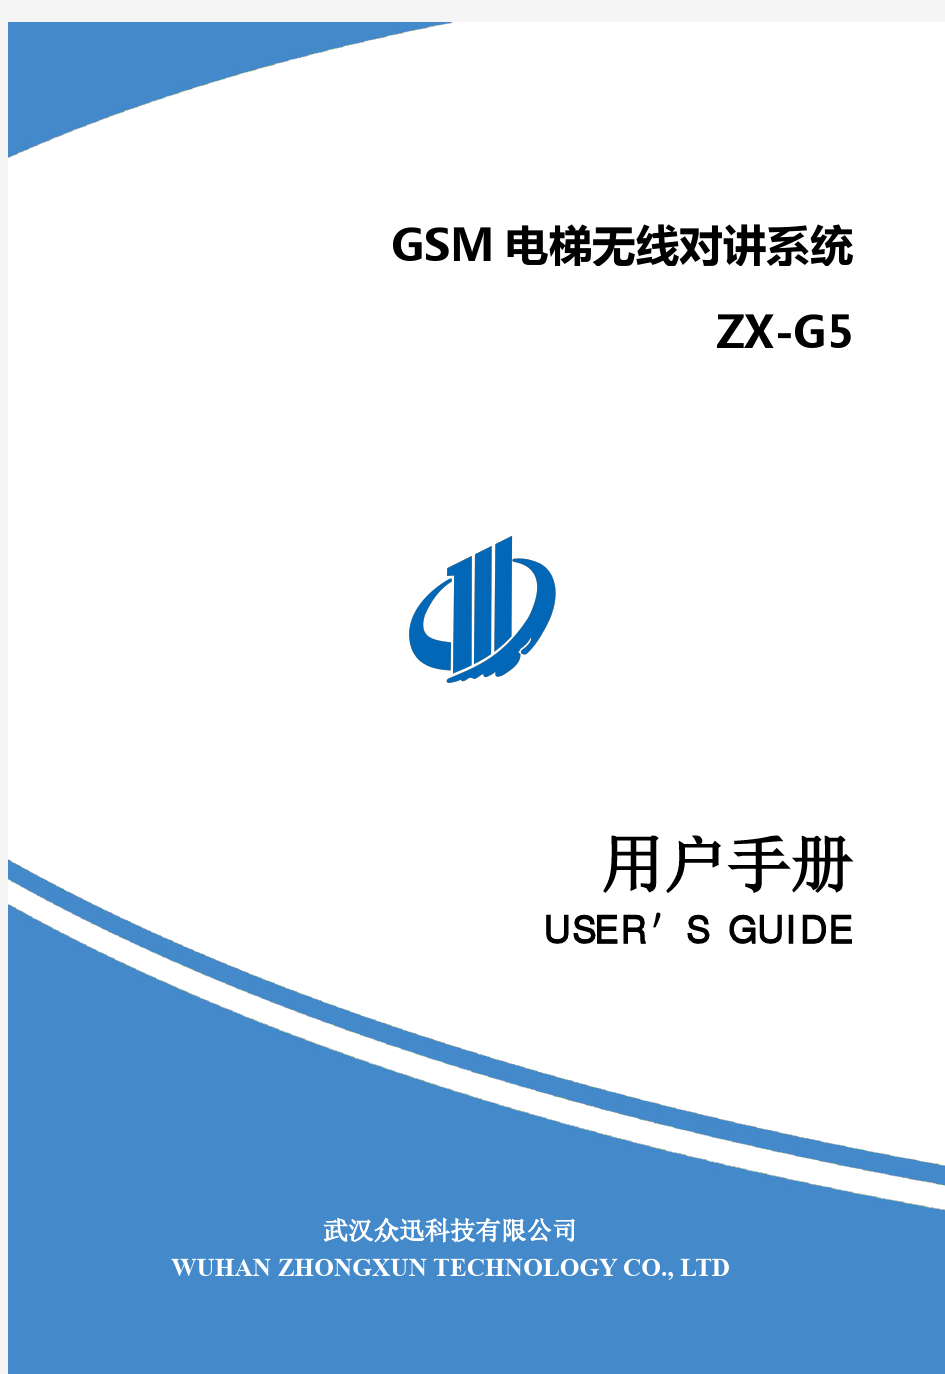 GSM电梯无线对讲系统产品手册